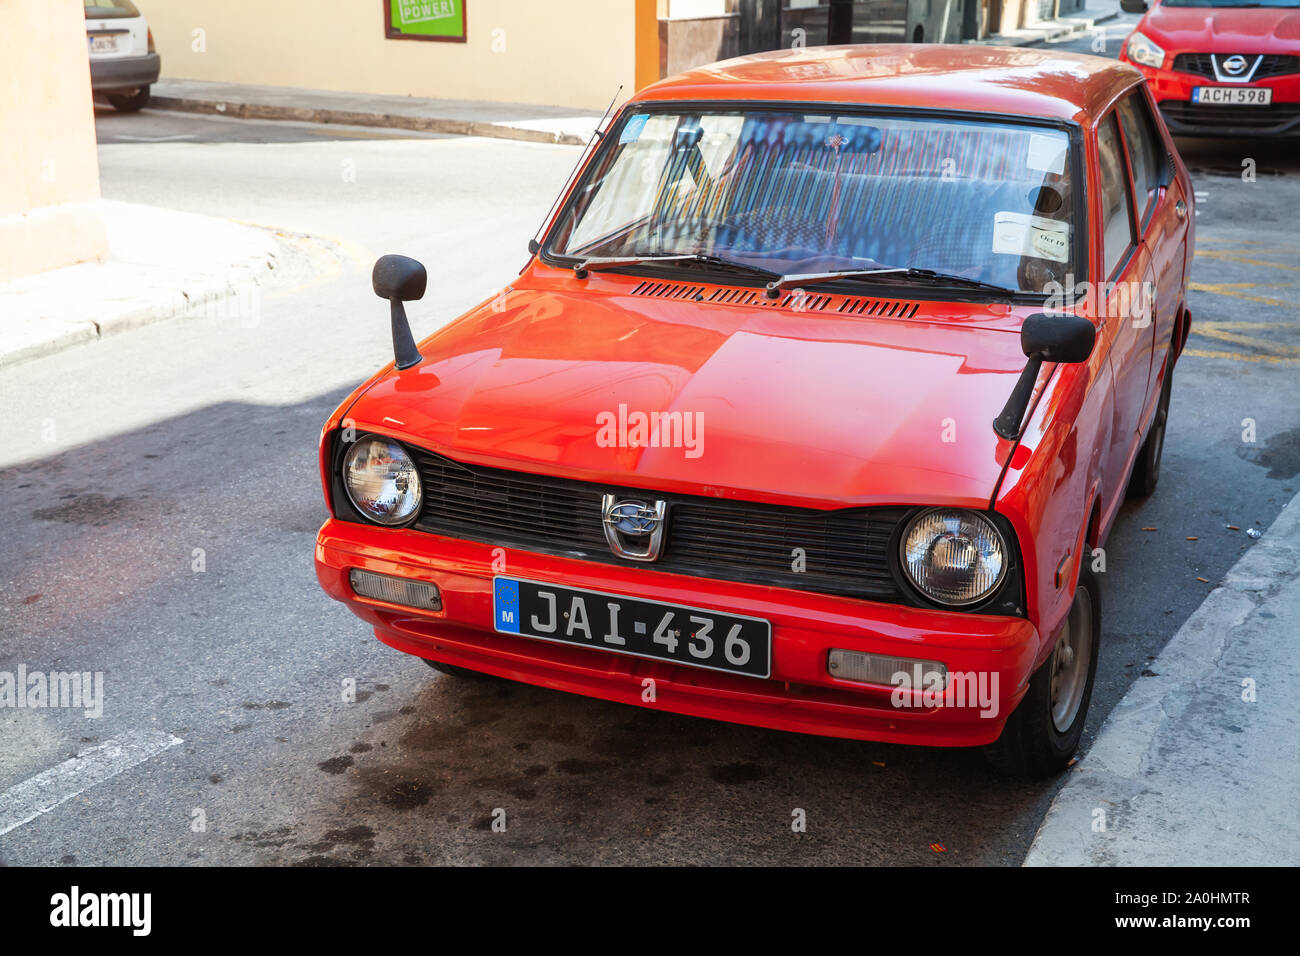 L-Imdina, Malta - August 25, 2019: Red Subaru Rex Combi or Van version car stands parked on a street Stock Photo